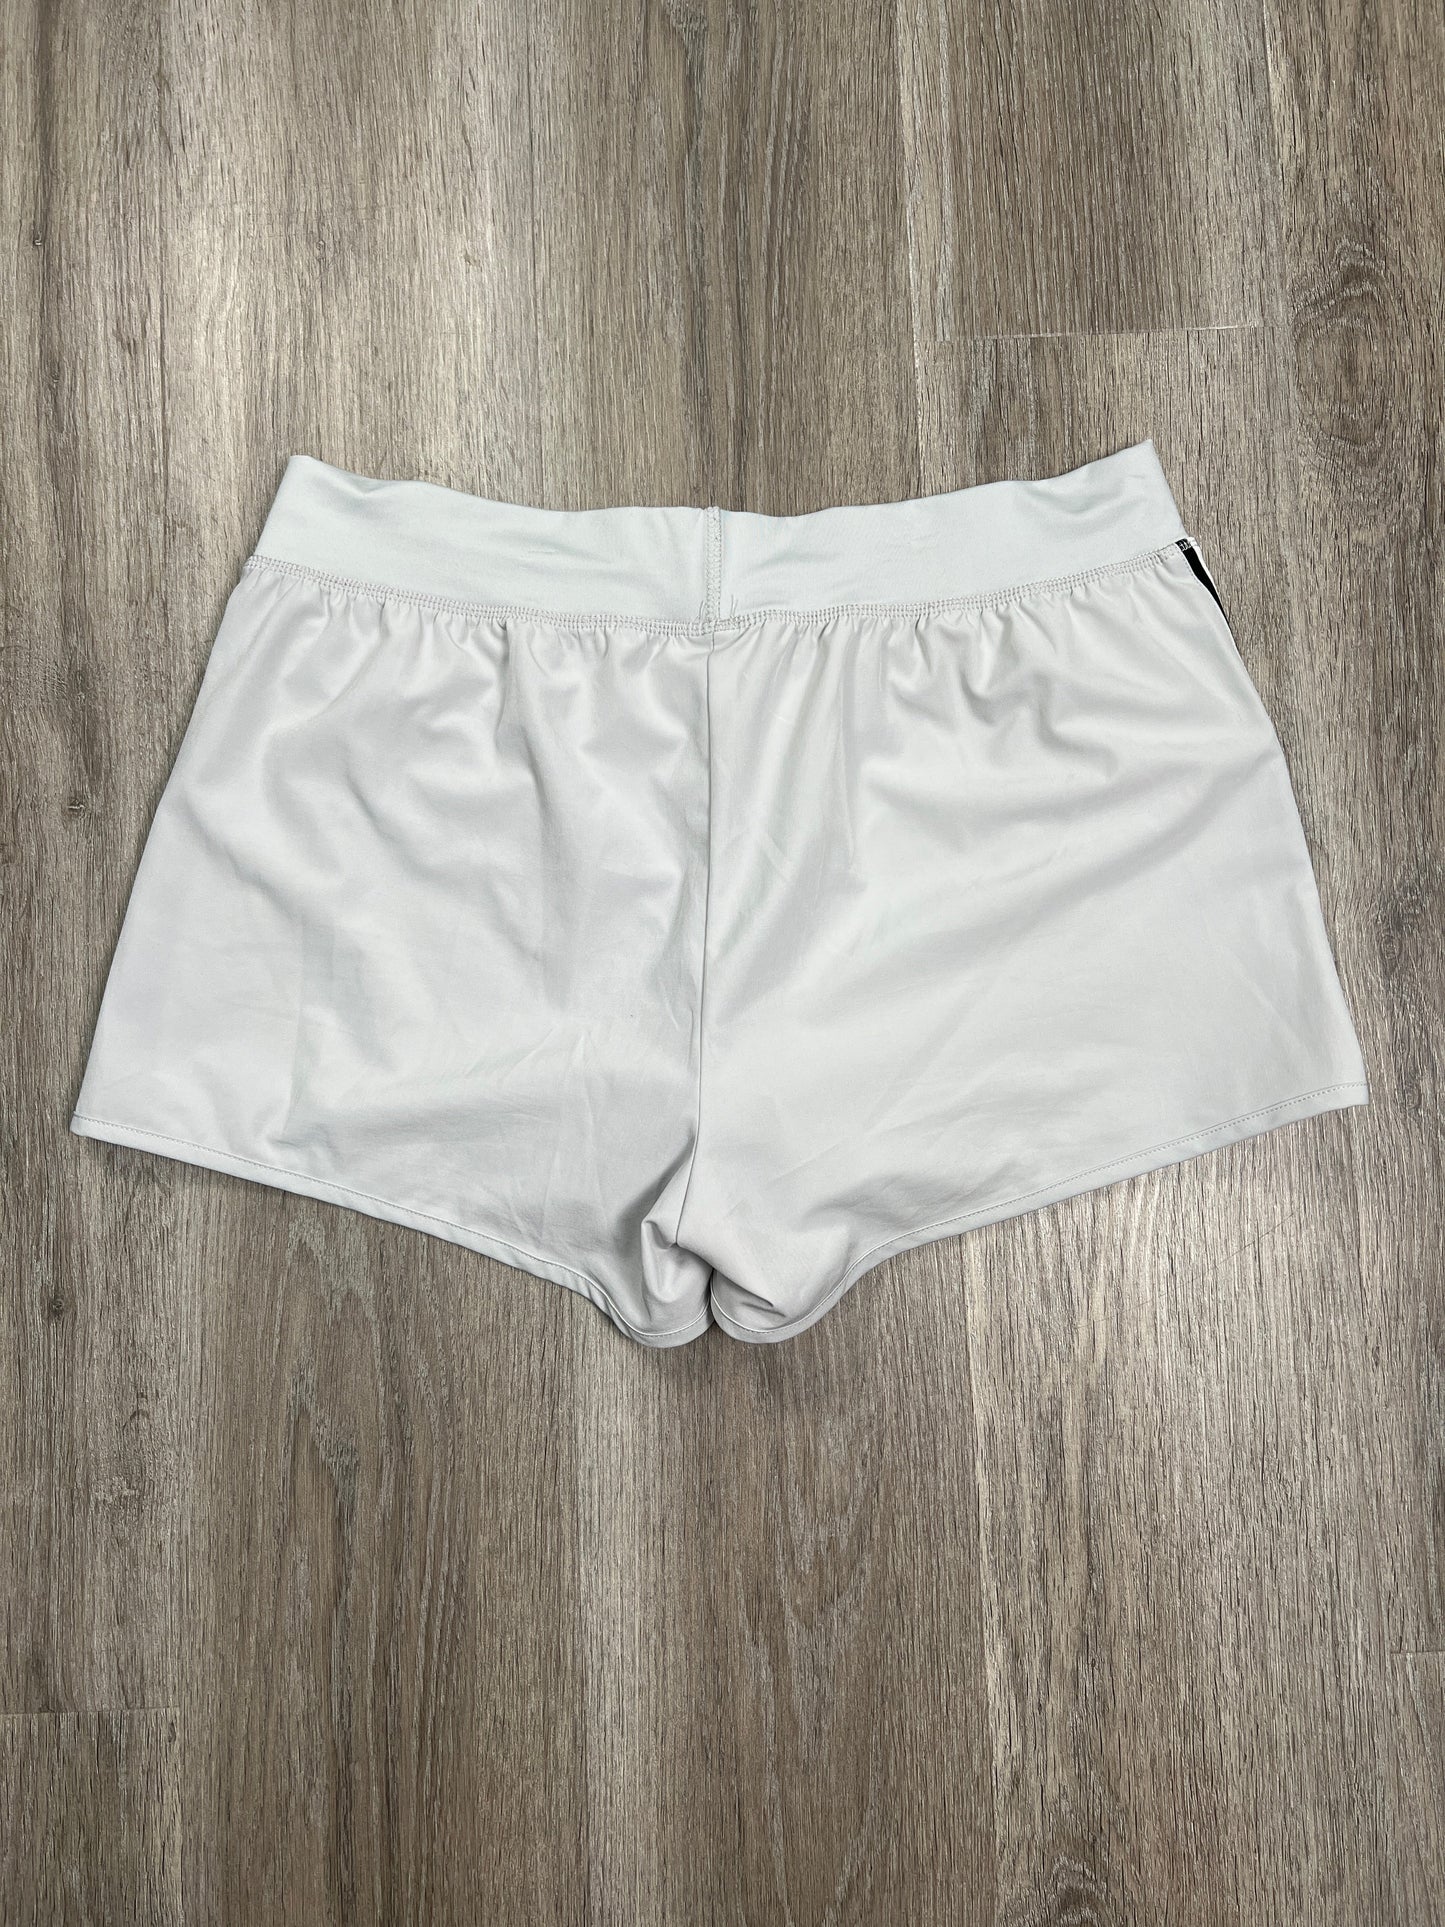 Grey Athletic Shorts Avia, Size L